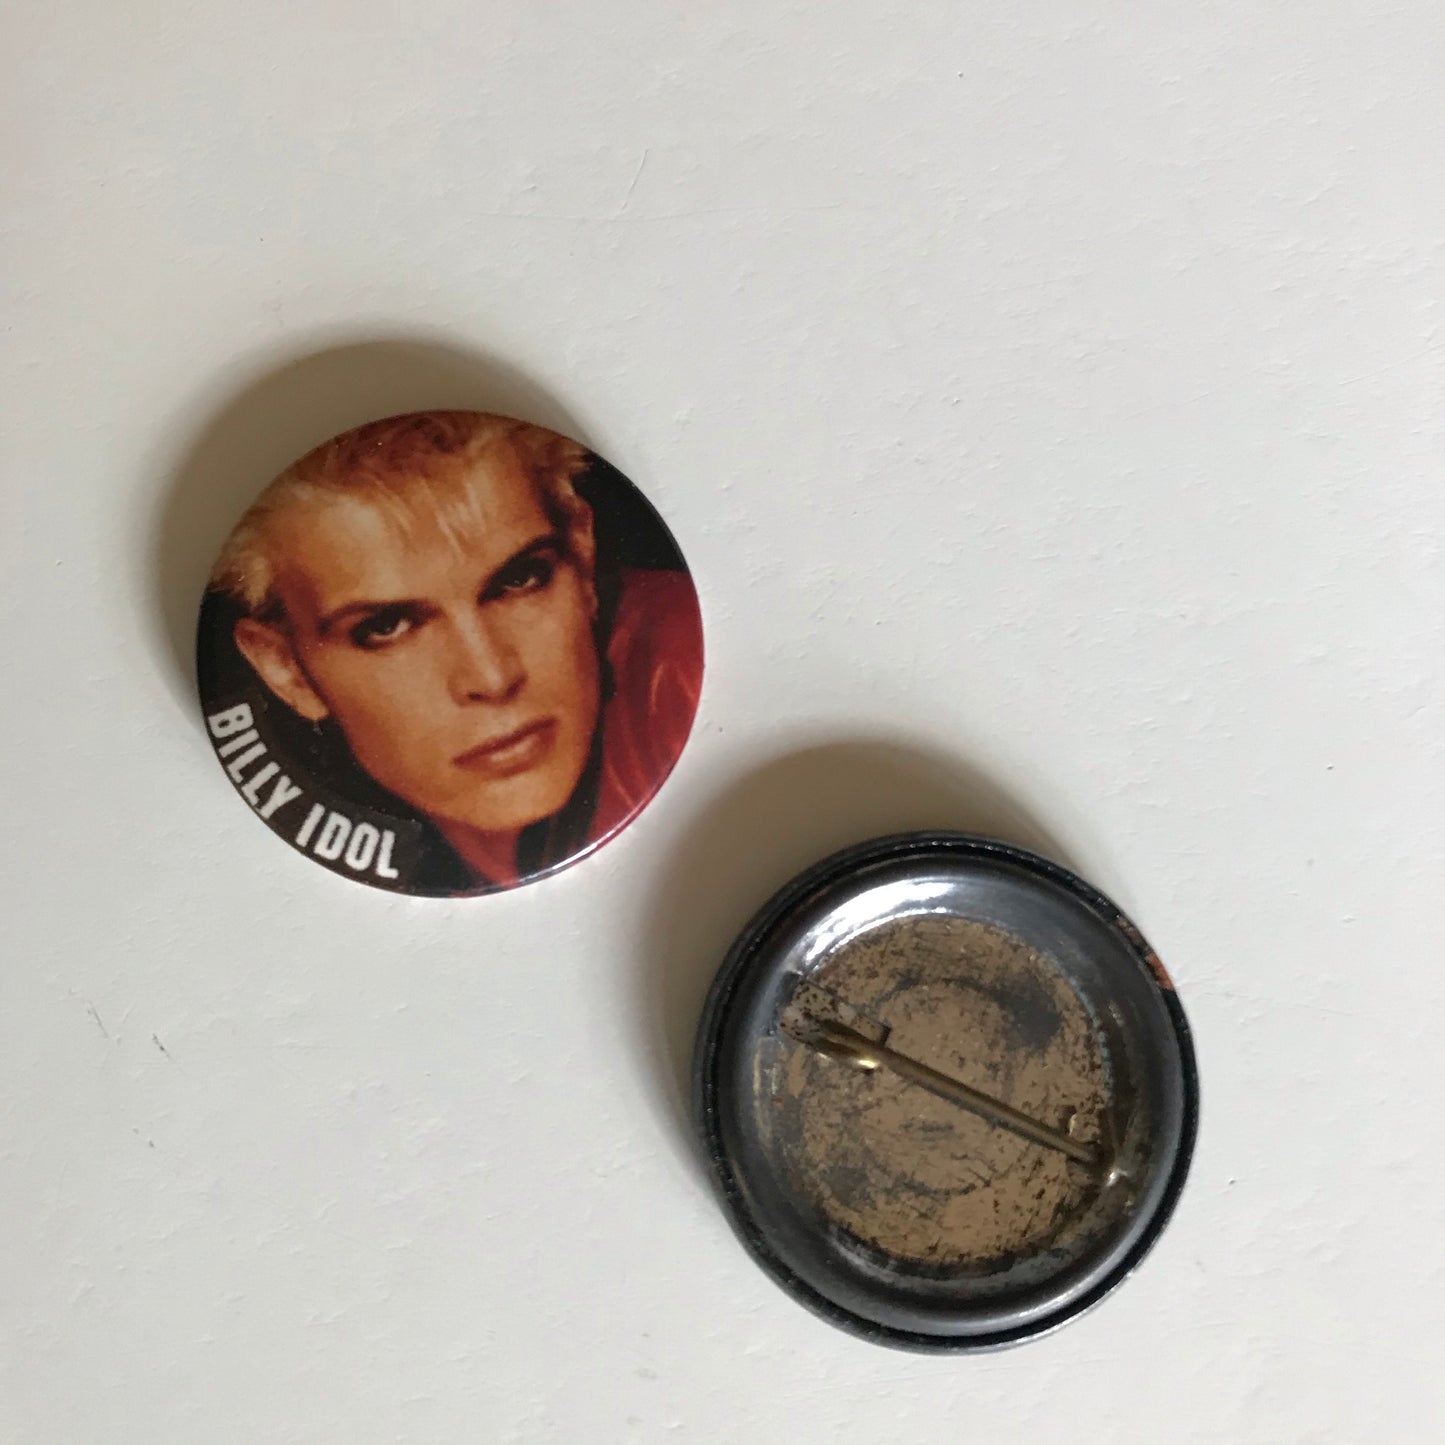 Billy Idol Pin Button Collection circa 1980s